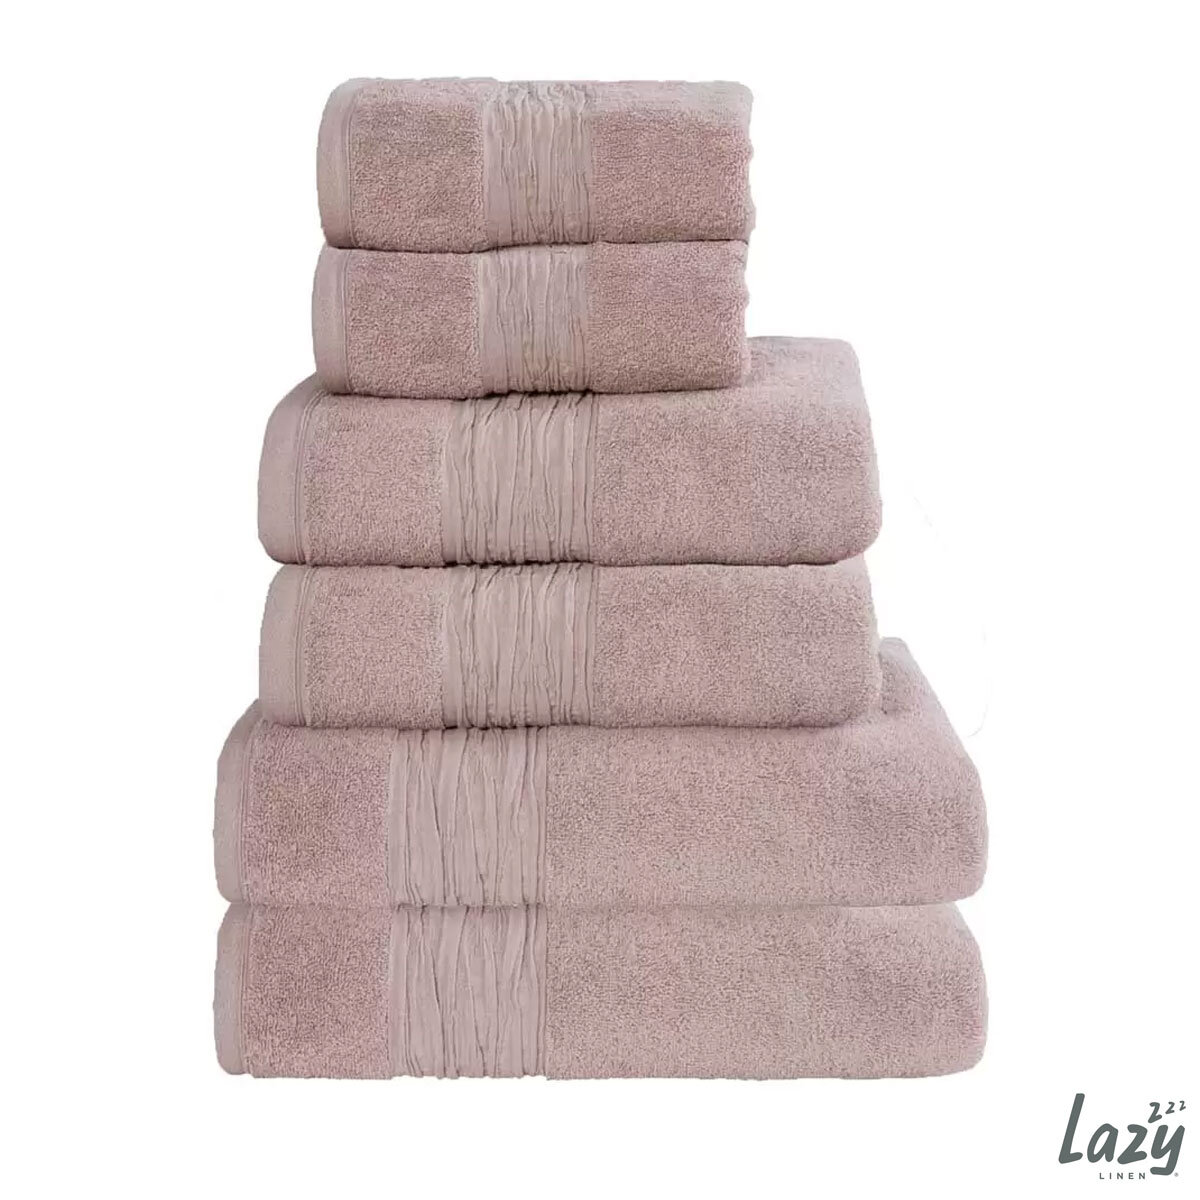 Lazy Linen 6 Piece Towel Bundle in Pink, 2 x Hand Towel, 2 x Hand Towels, 2 x Bath Towels & 2 x Bath Sheets